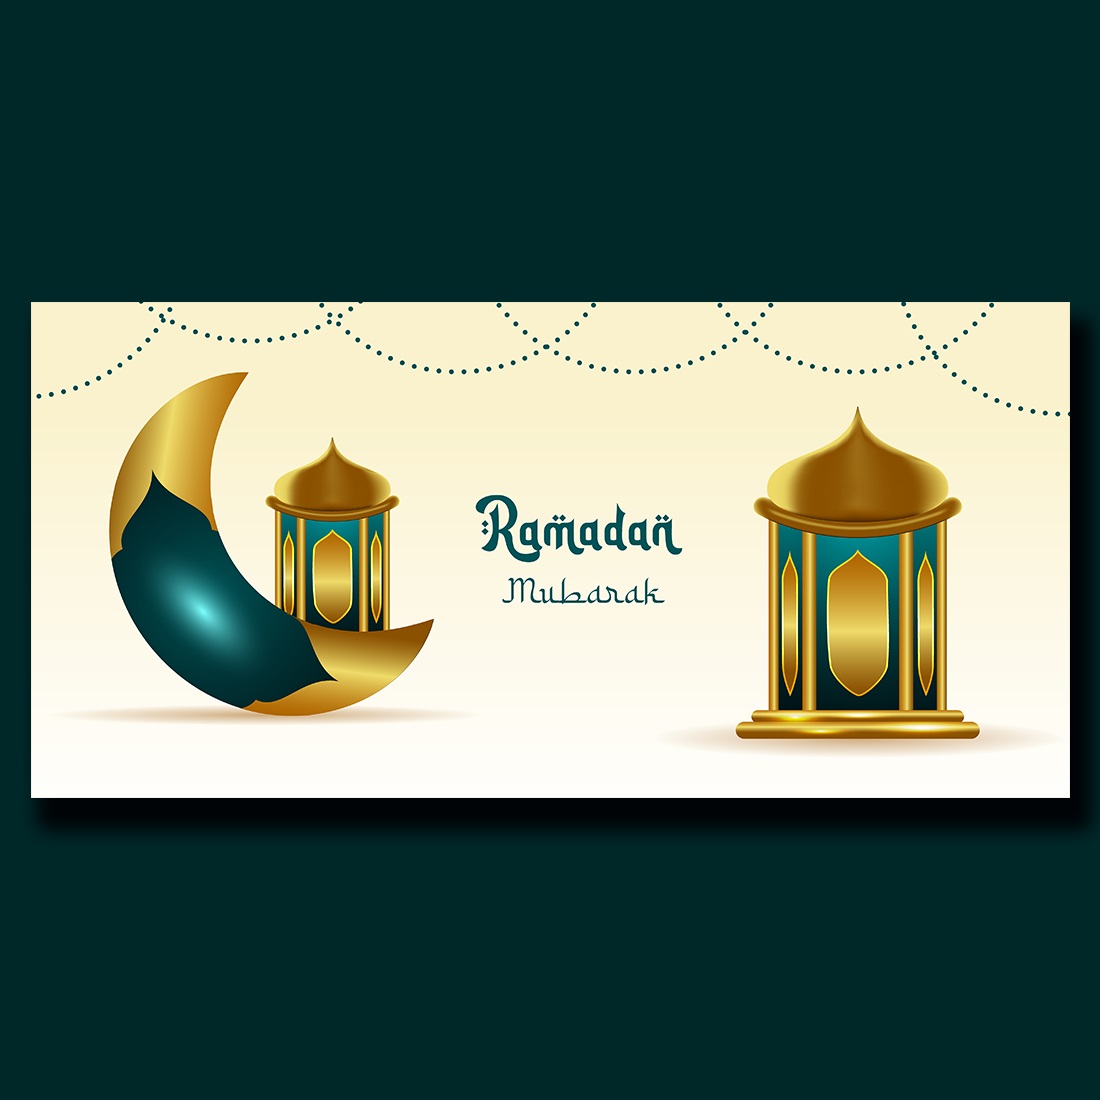 Ramadan Banner for Islamic Celebration cover image.